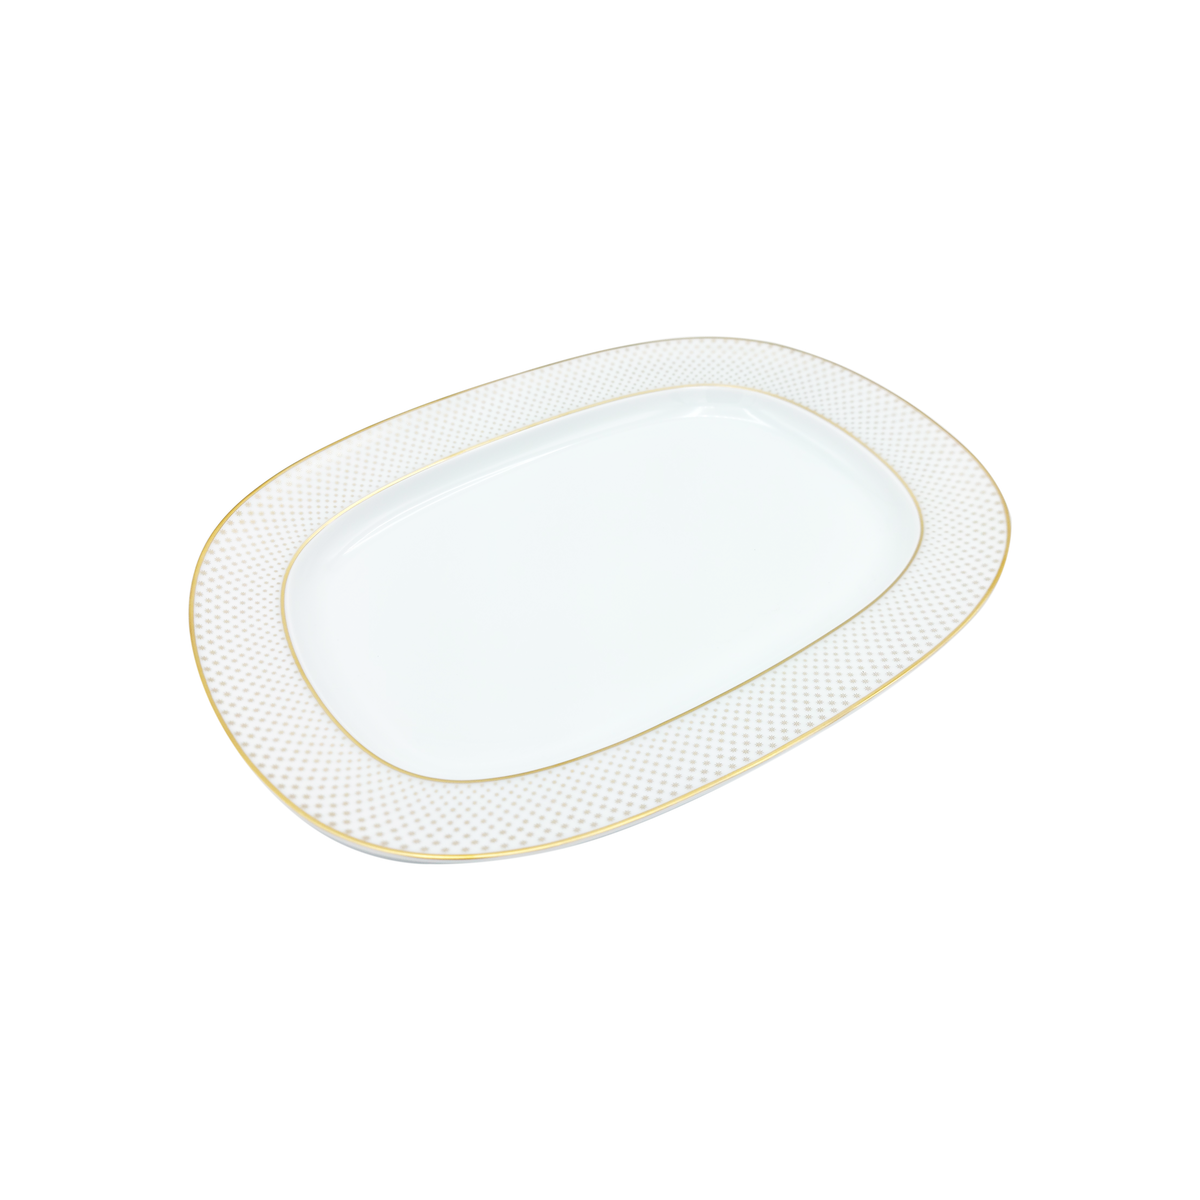 Rosace - Oval platter, large